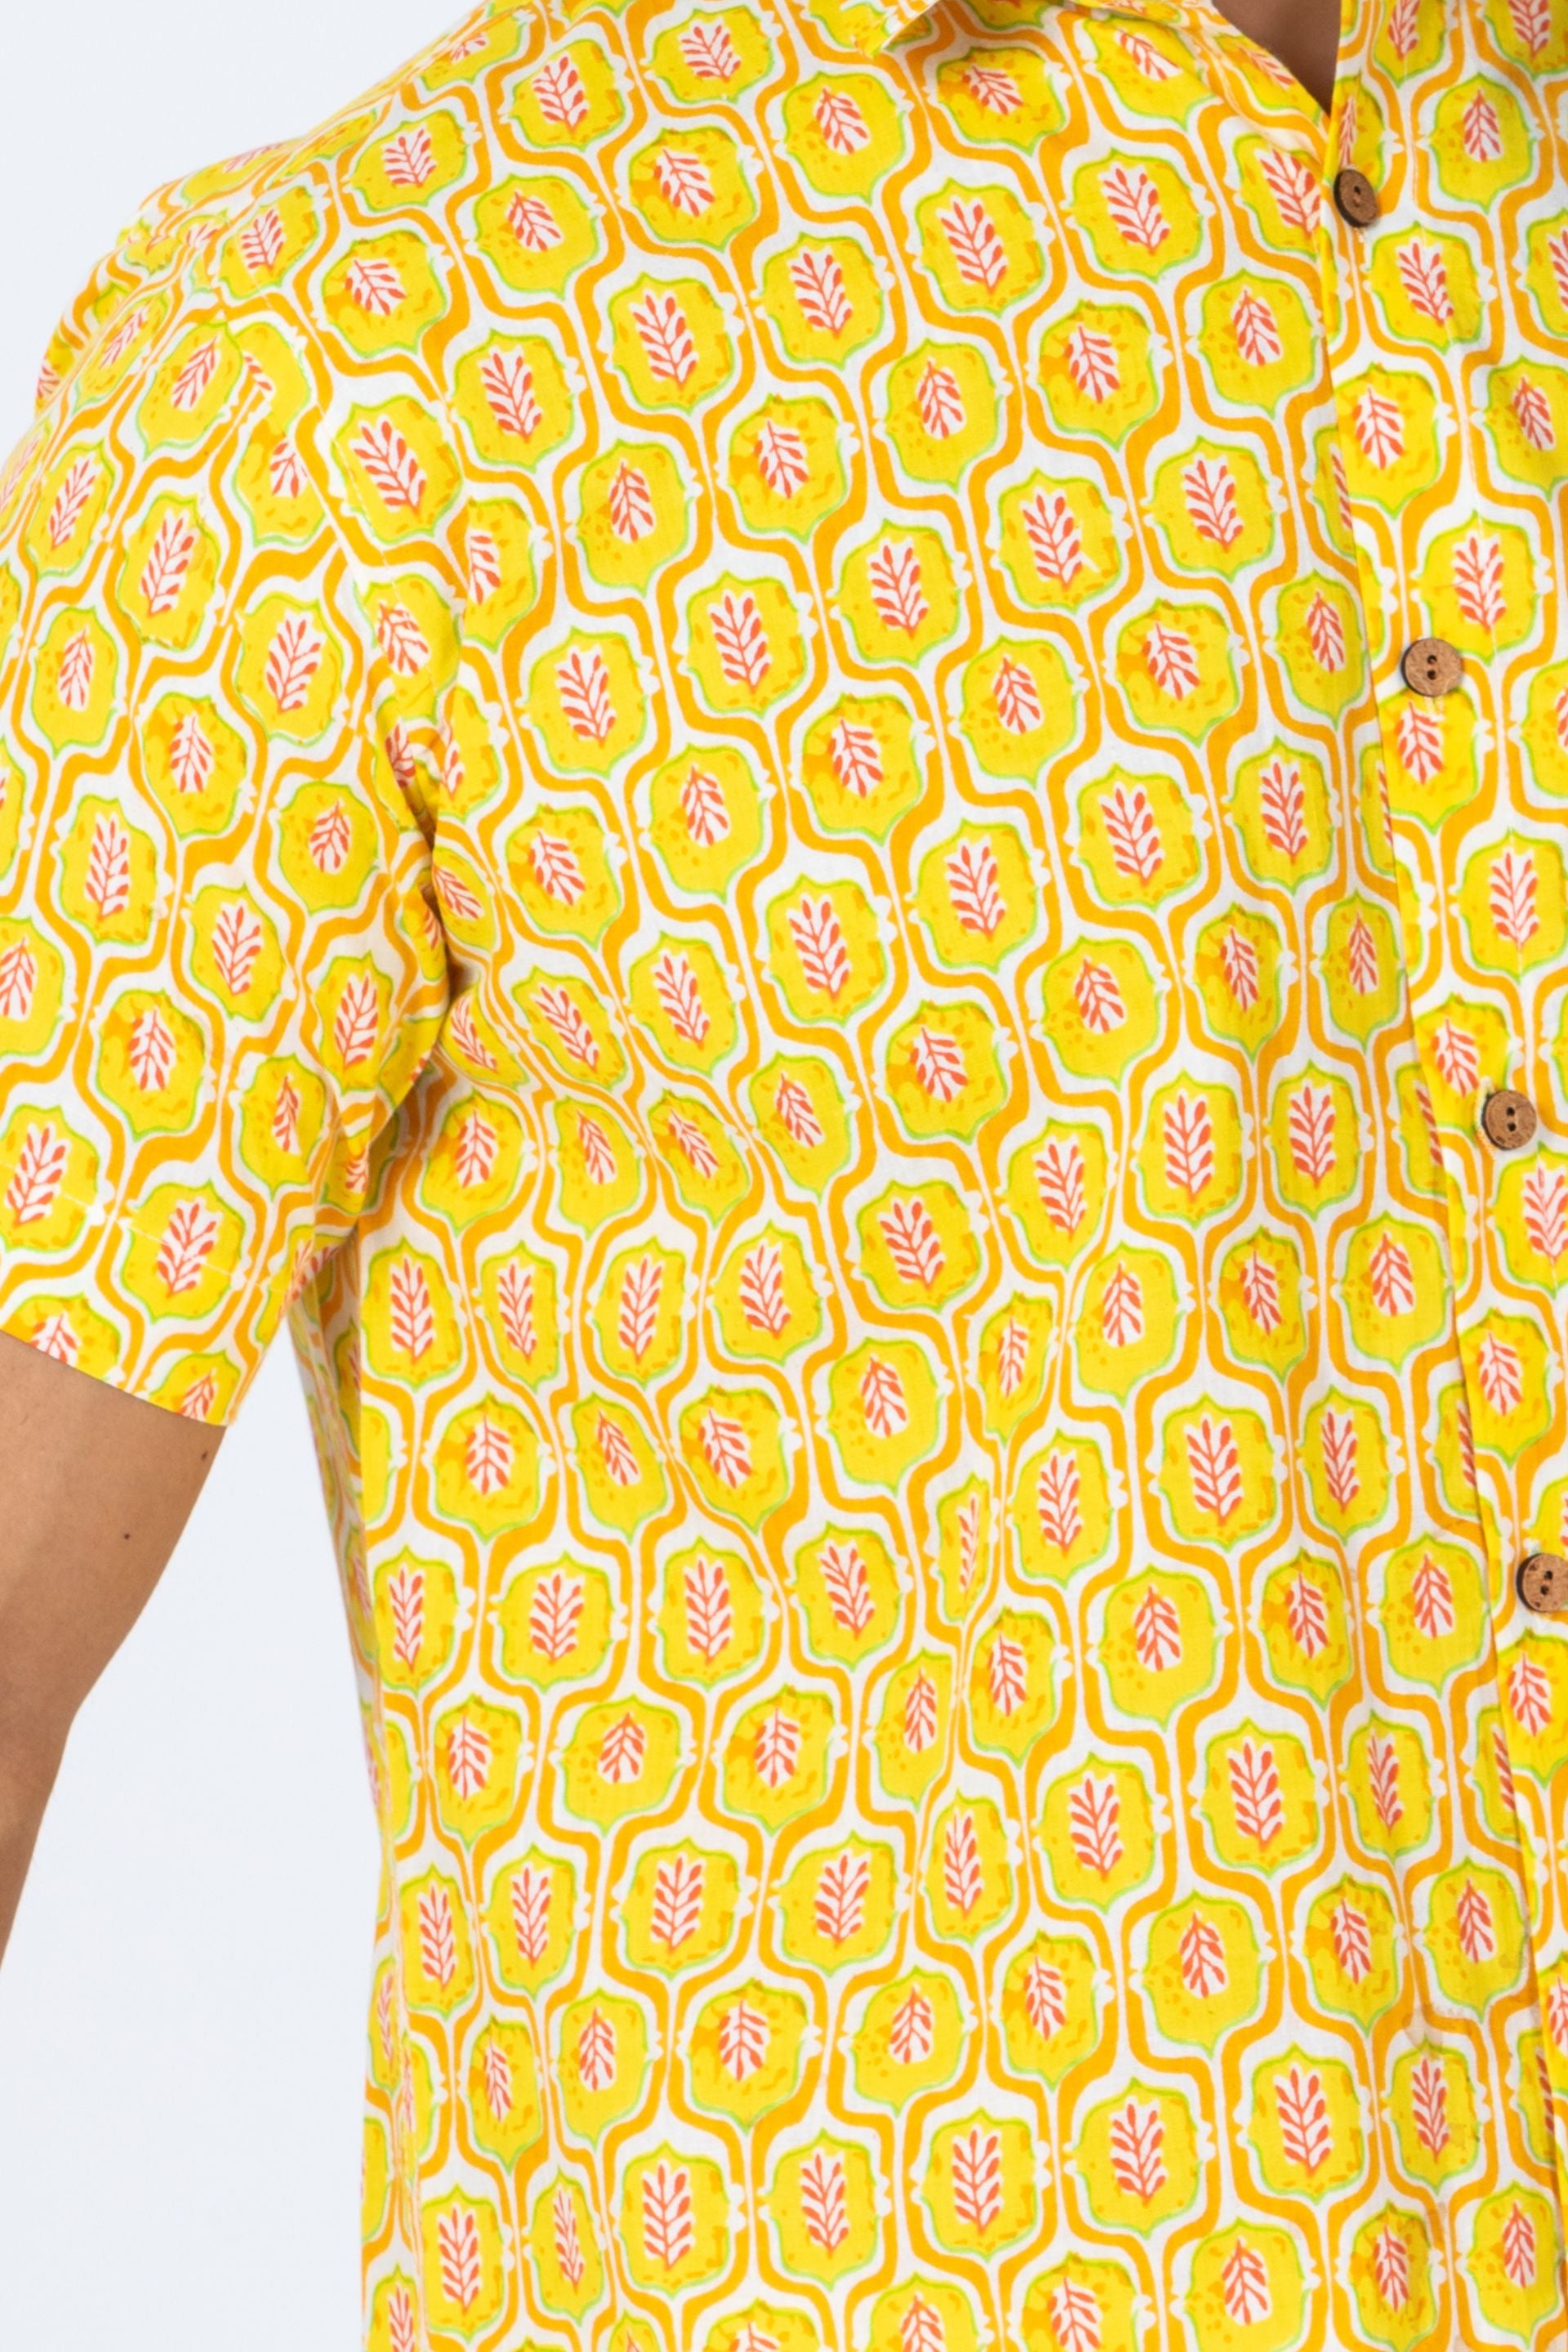 Firangi Yarn Yellow Ethnic Pattern Hand Printed Shirt For Men - Half Sleeves